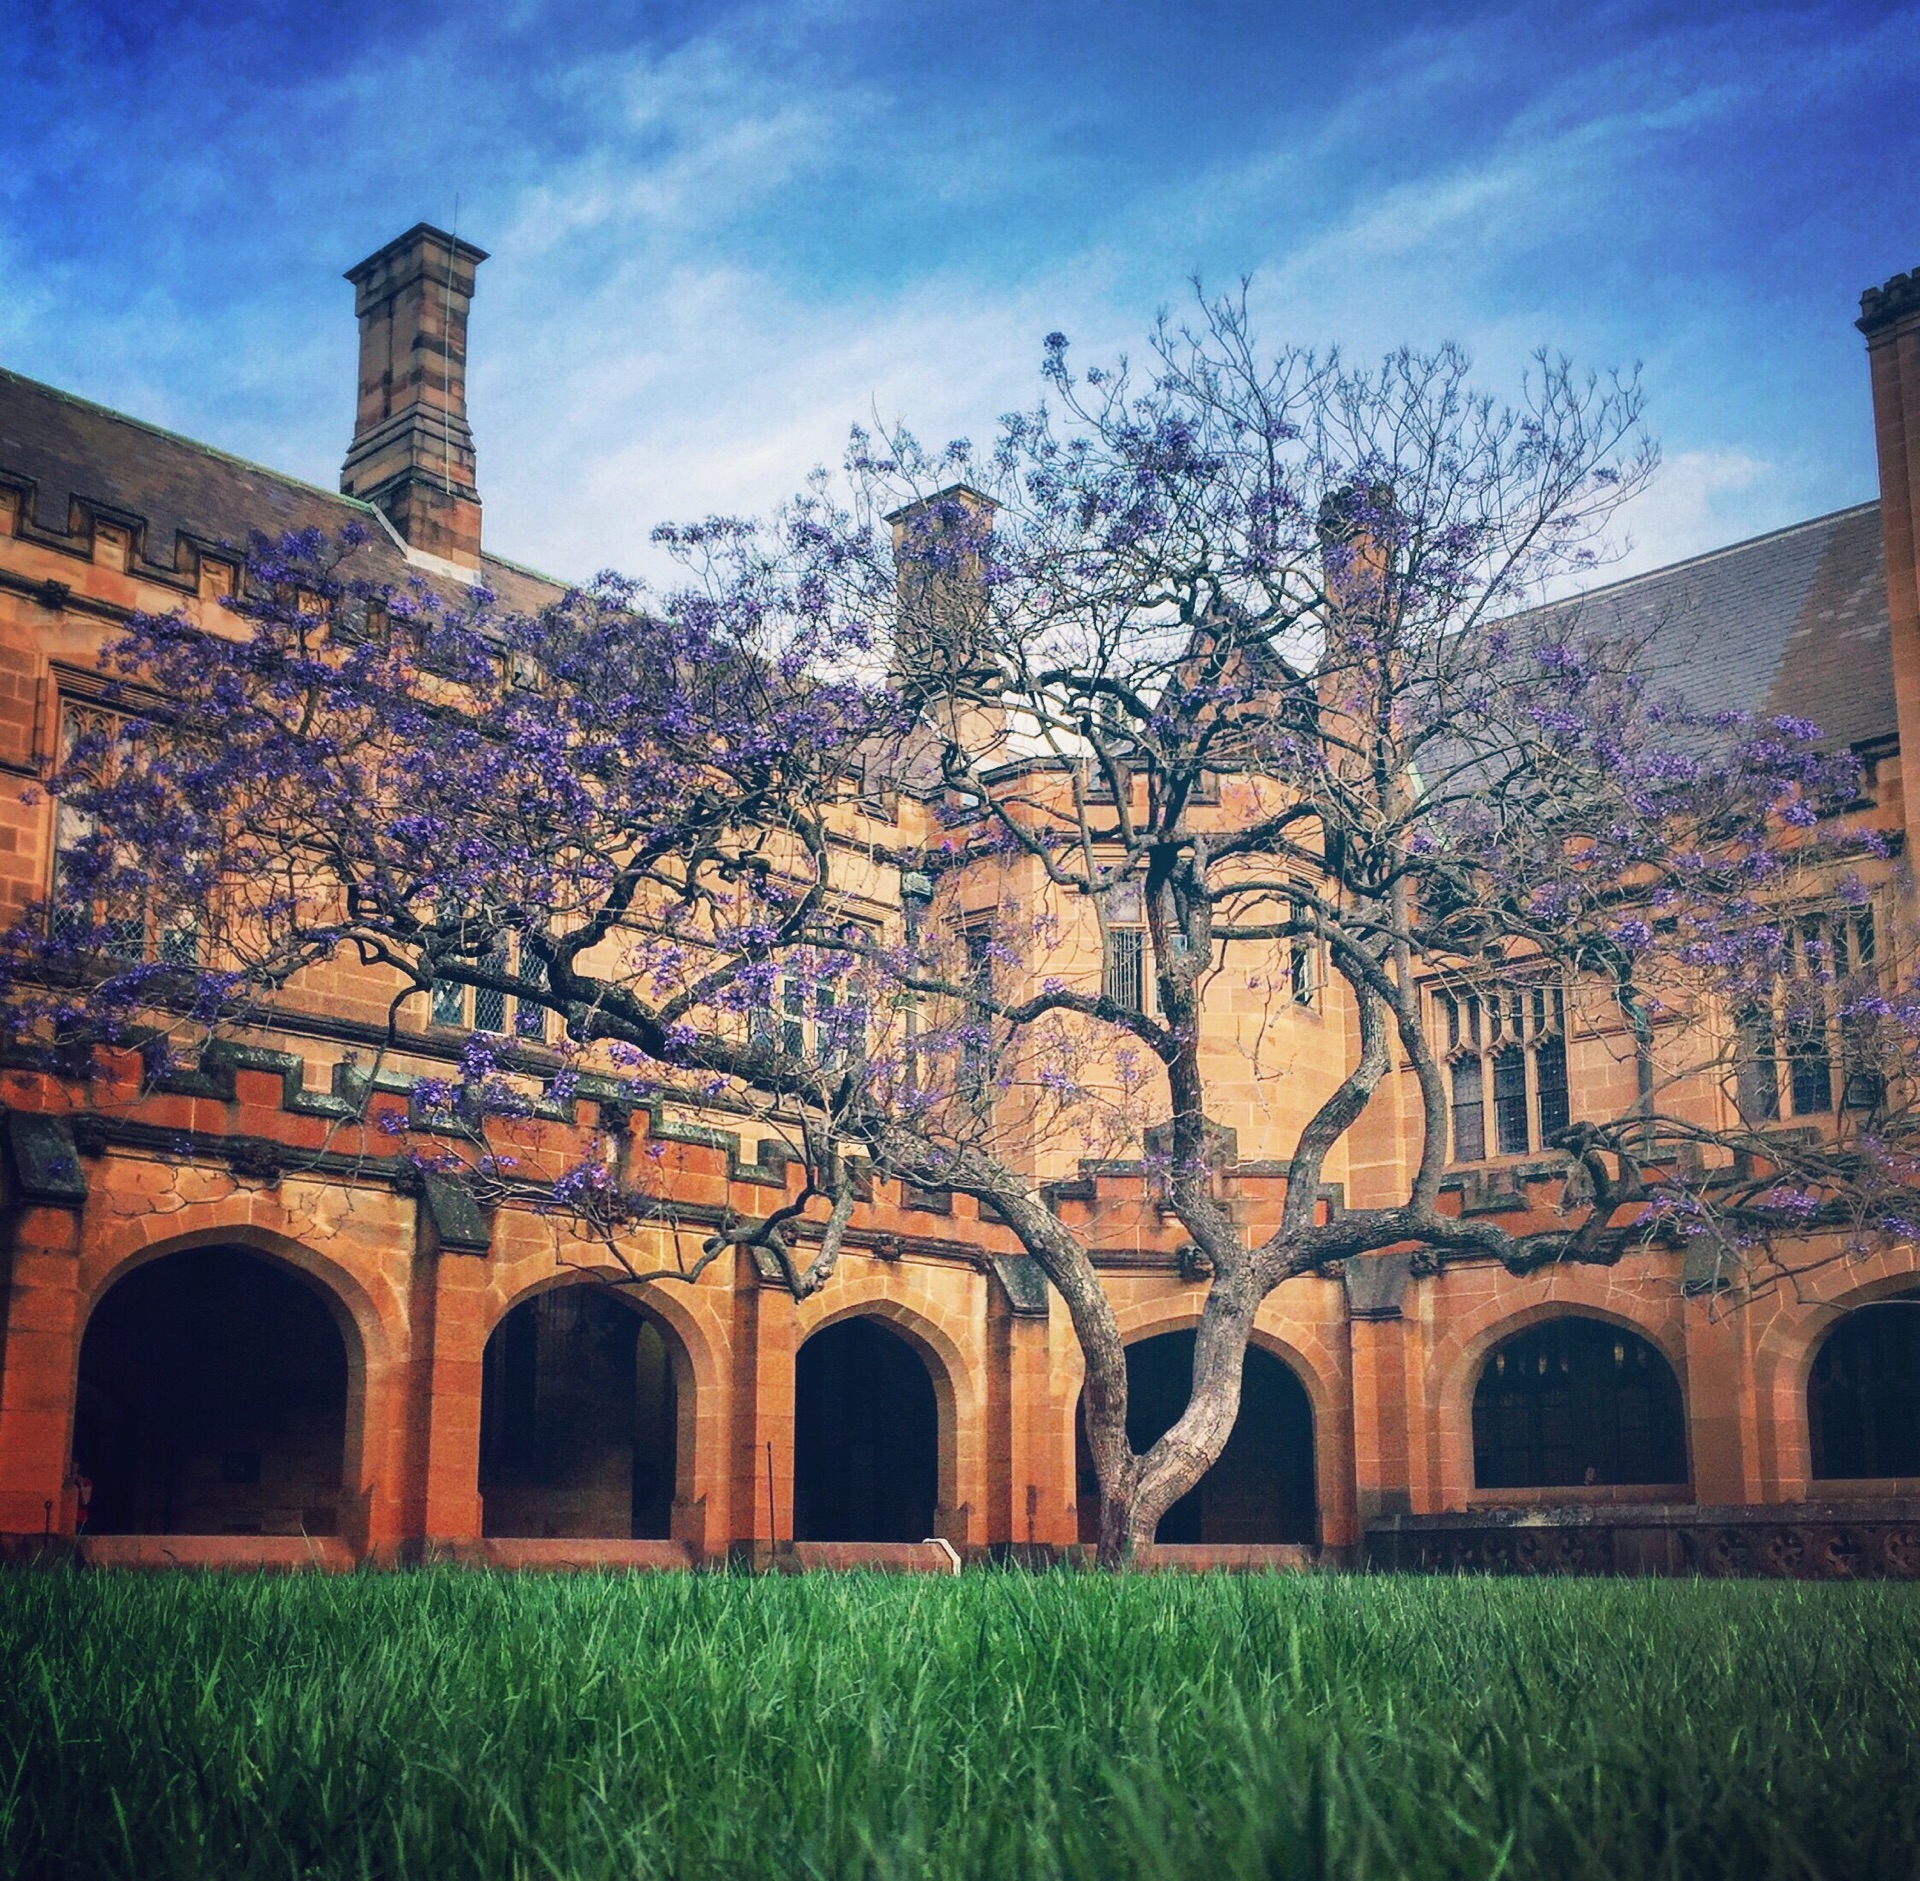 About us - The University of Sydney